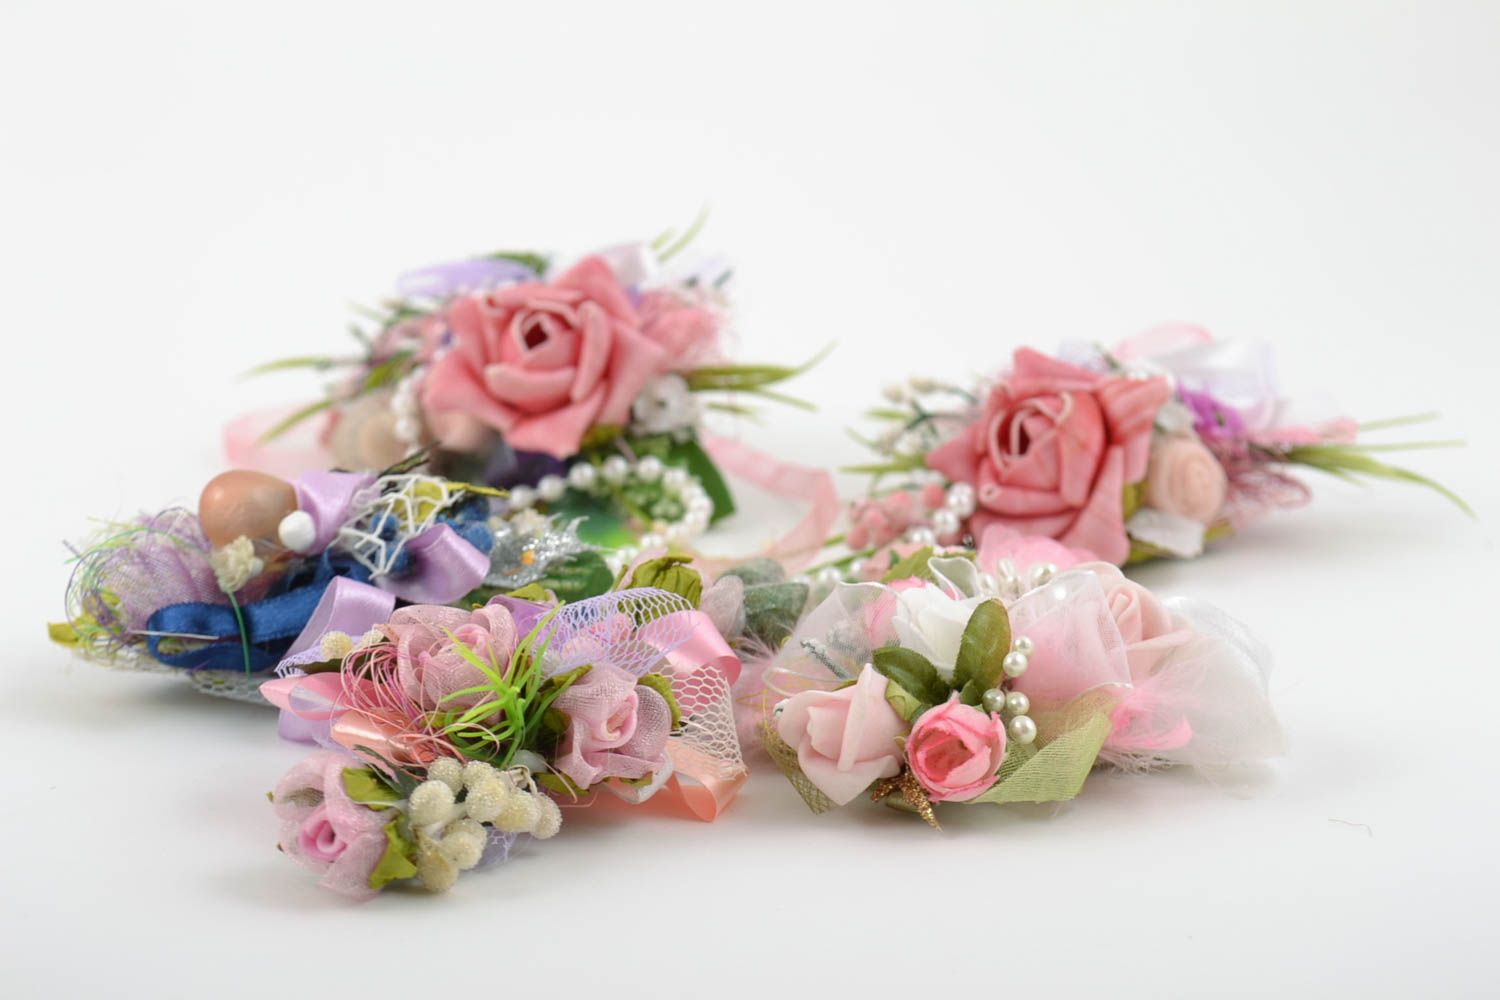 Handmade brooch designer boutonniere designer wedding accessories set of 5 items photo 4